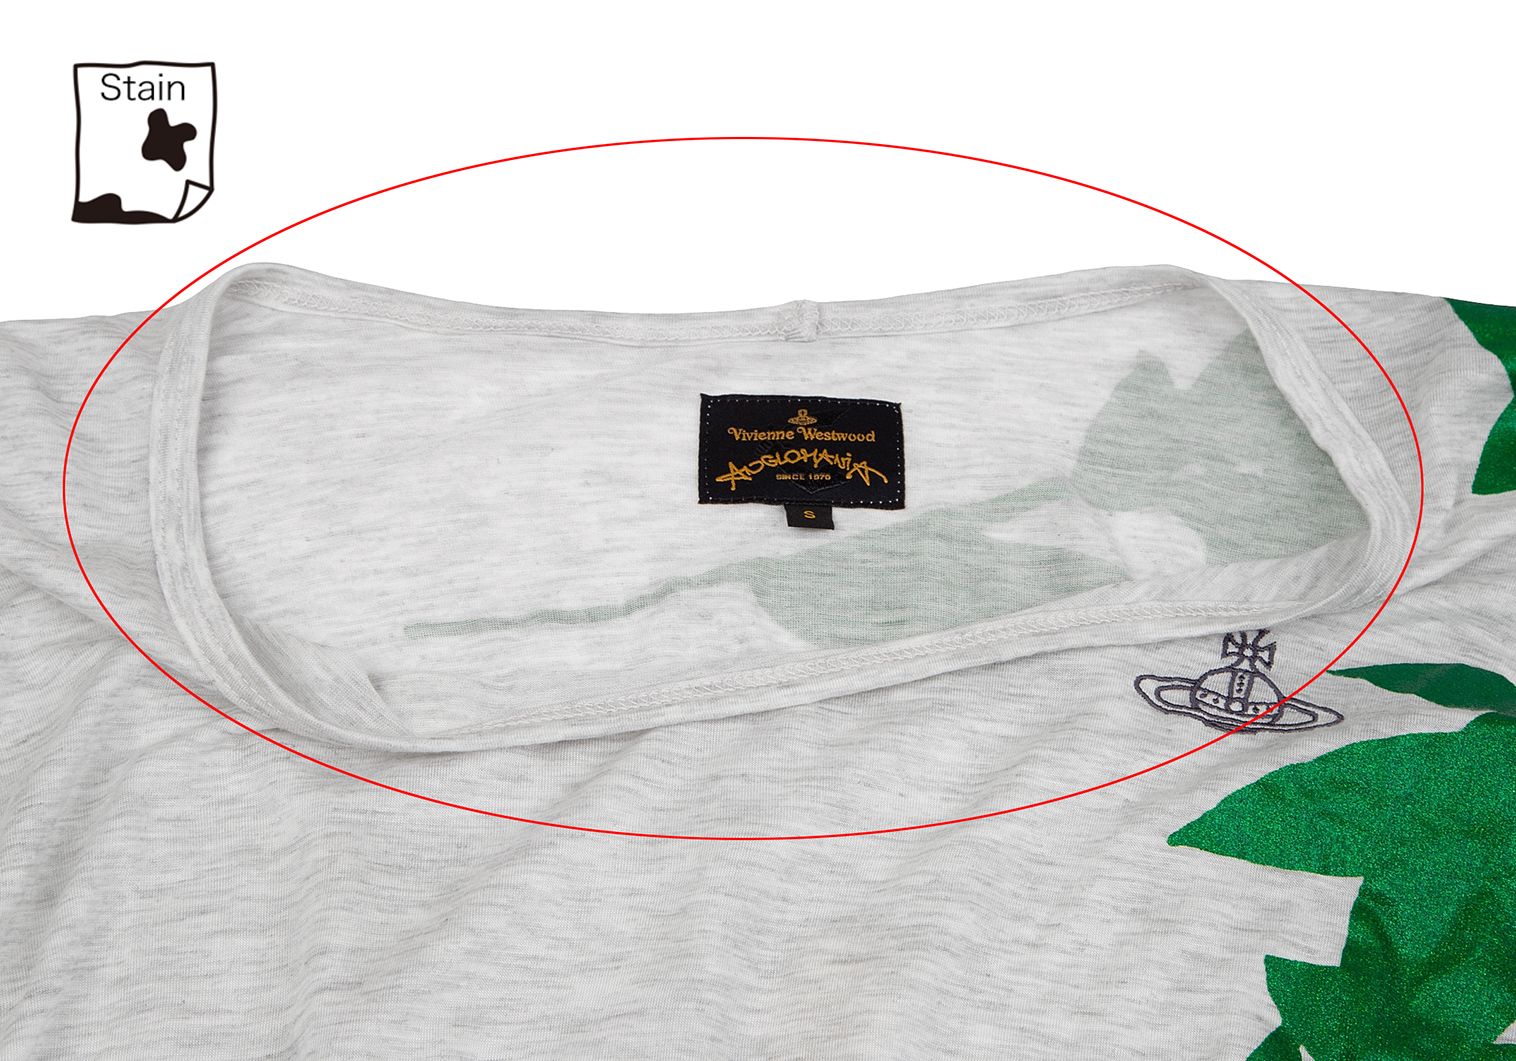 【H】サンローランパリ サンダーロゴ ヴィンテージ加工 プリント Tシャツ S